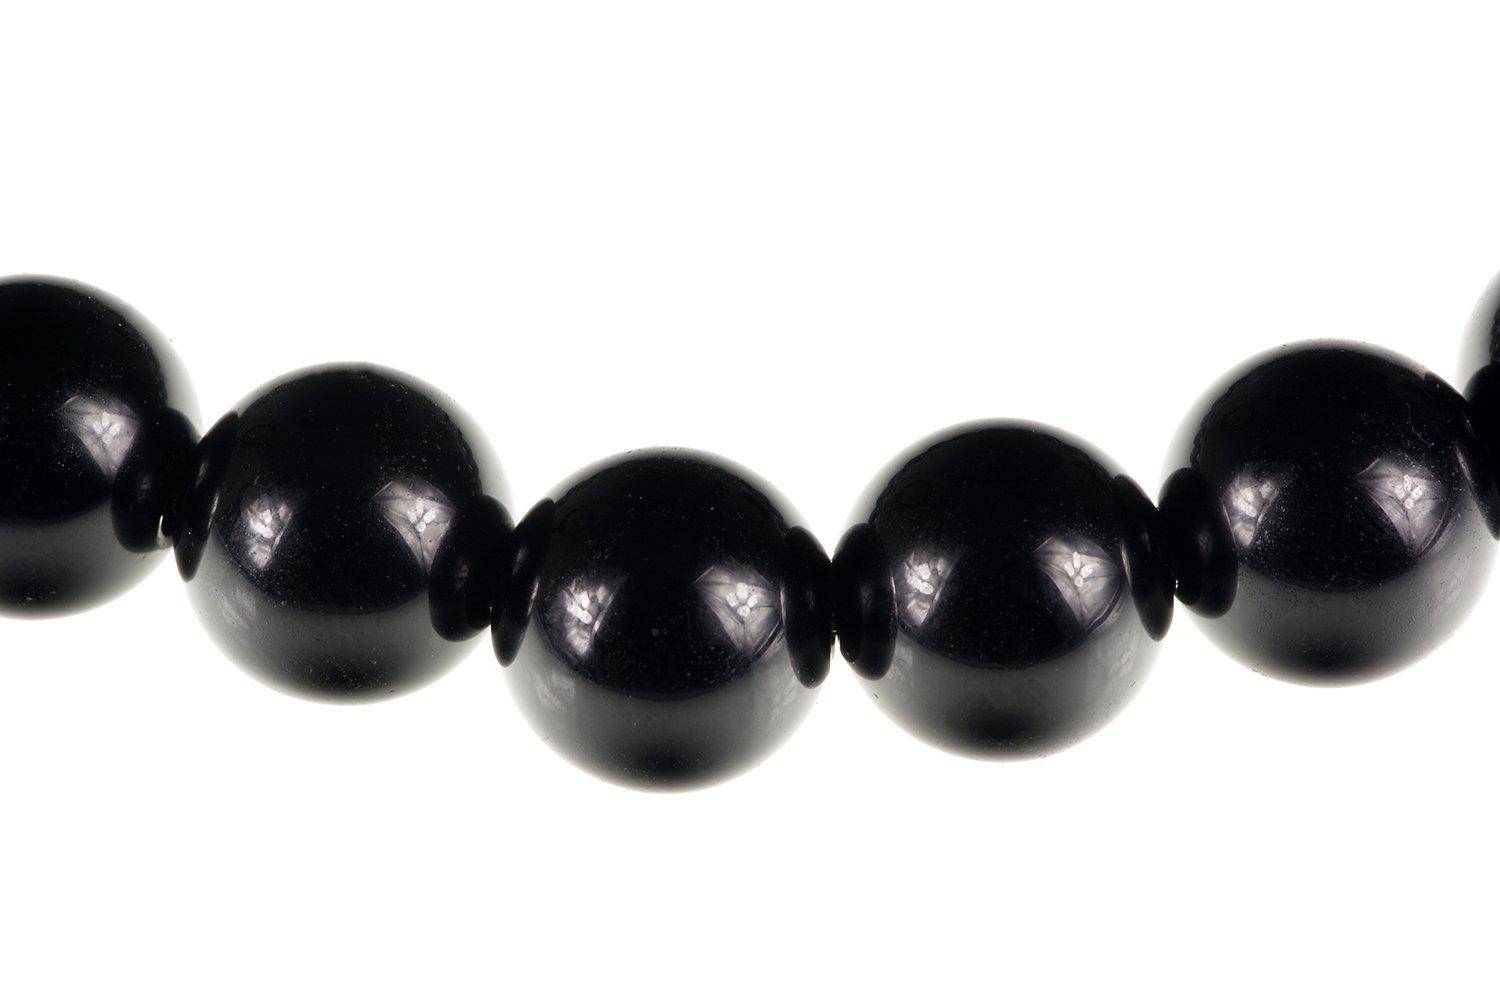 Black onyx bracelet – 8mm